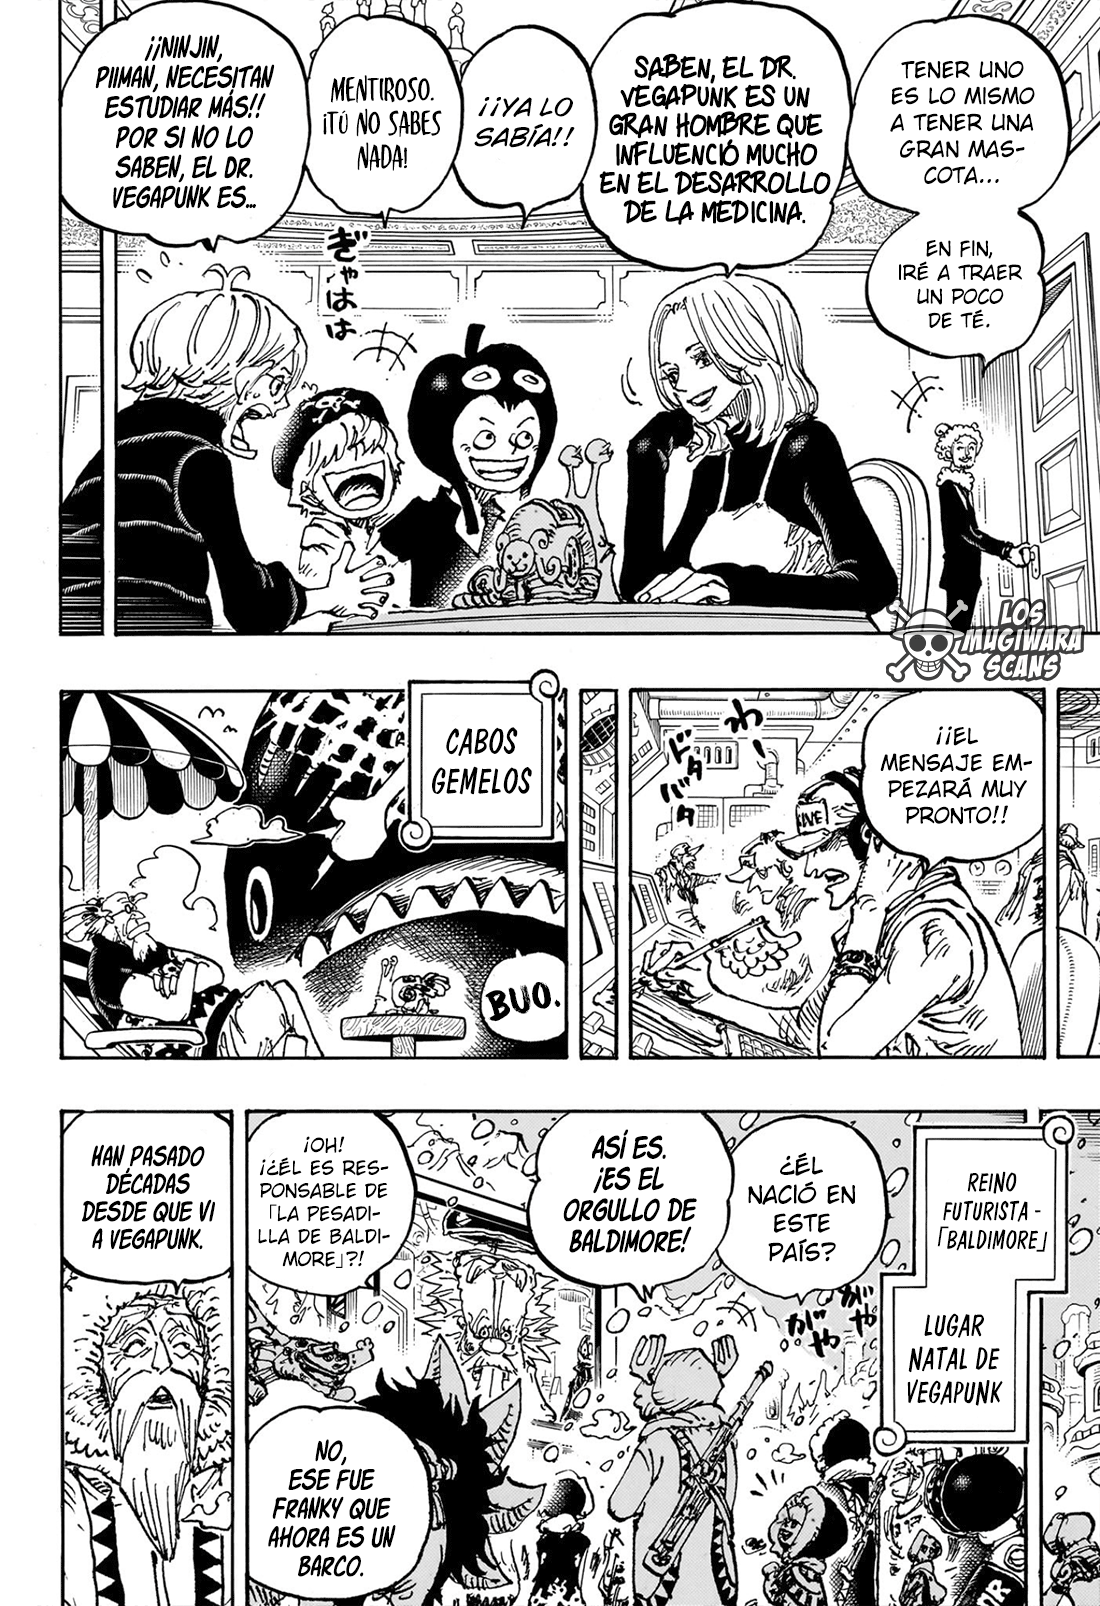 español - One Piece Manga 1113 [Español] 03